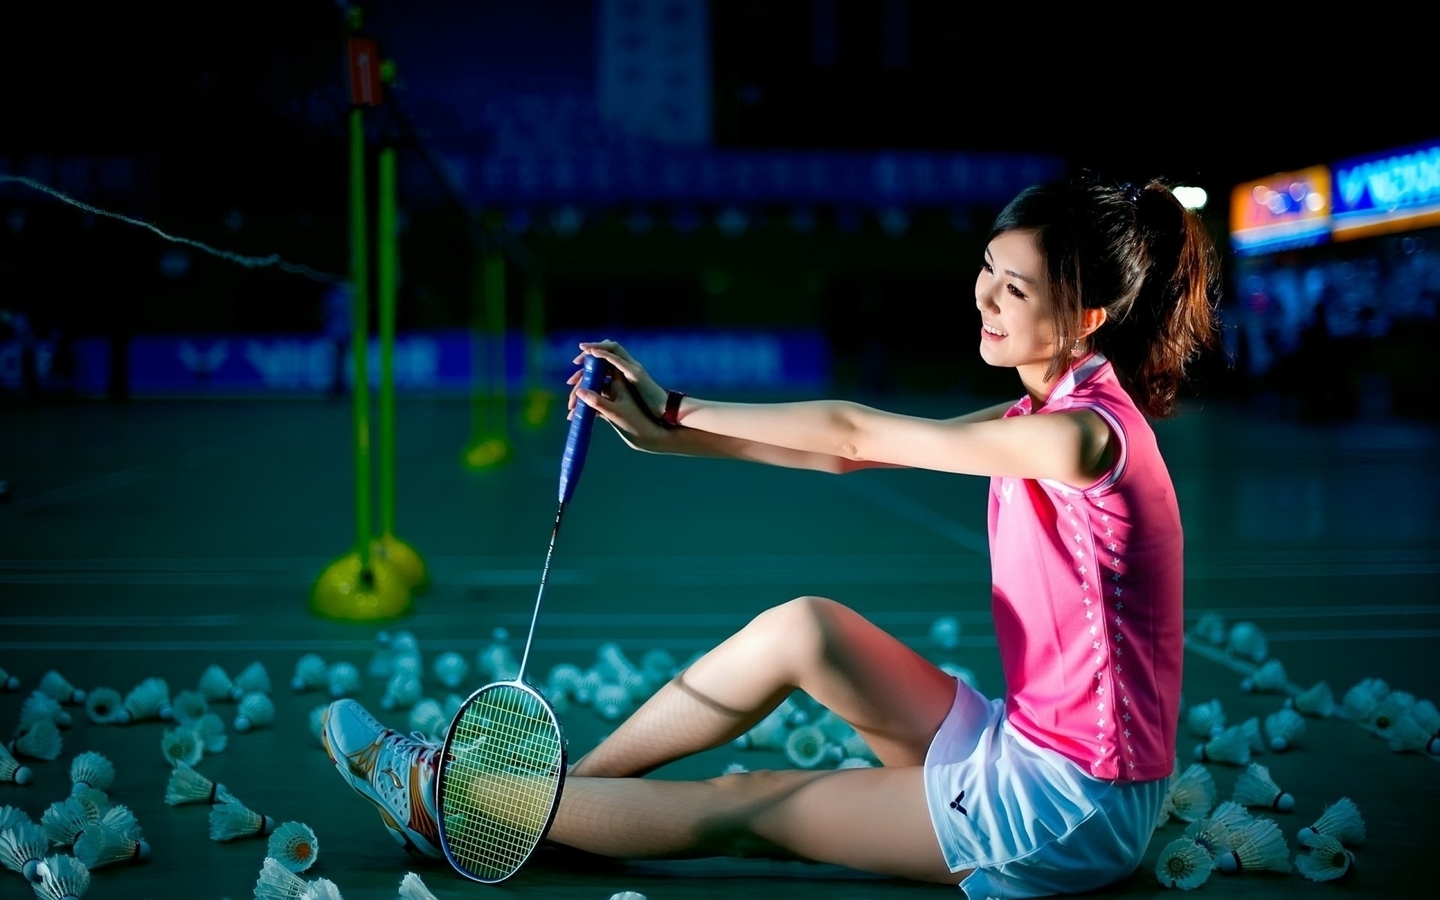 Image: Badminton, racket, shuttlecock, Chinese girl, gym